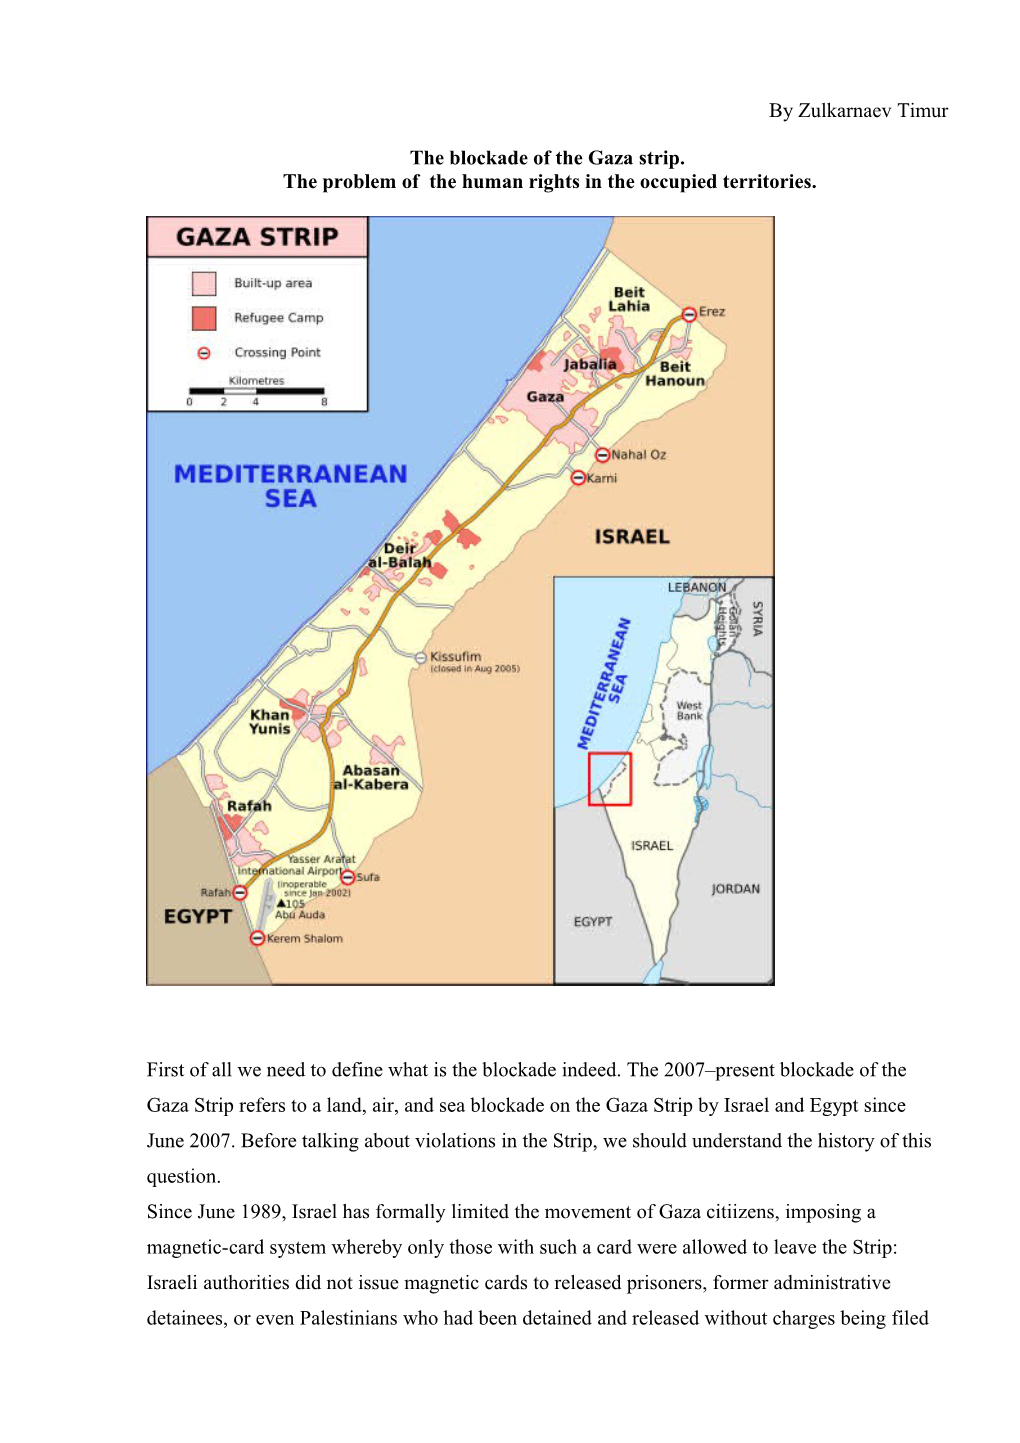 The Blockade of the Gaza Strip